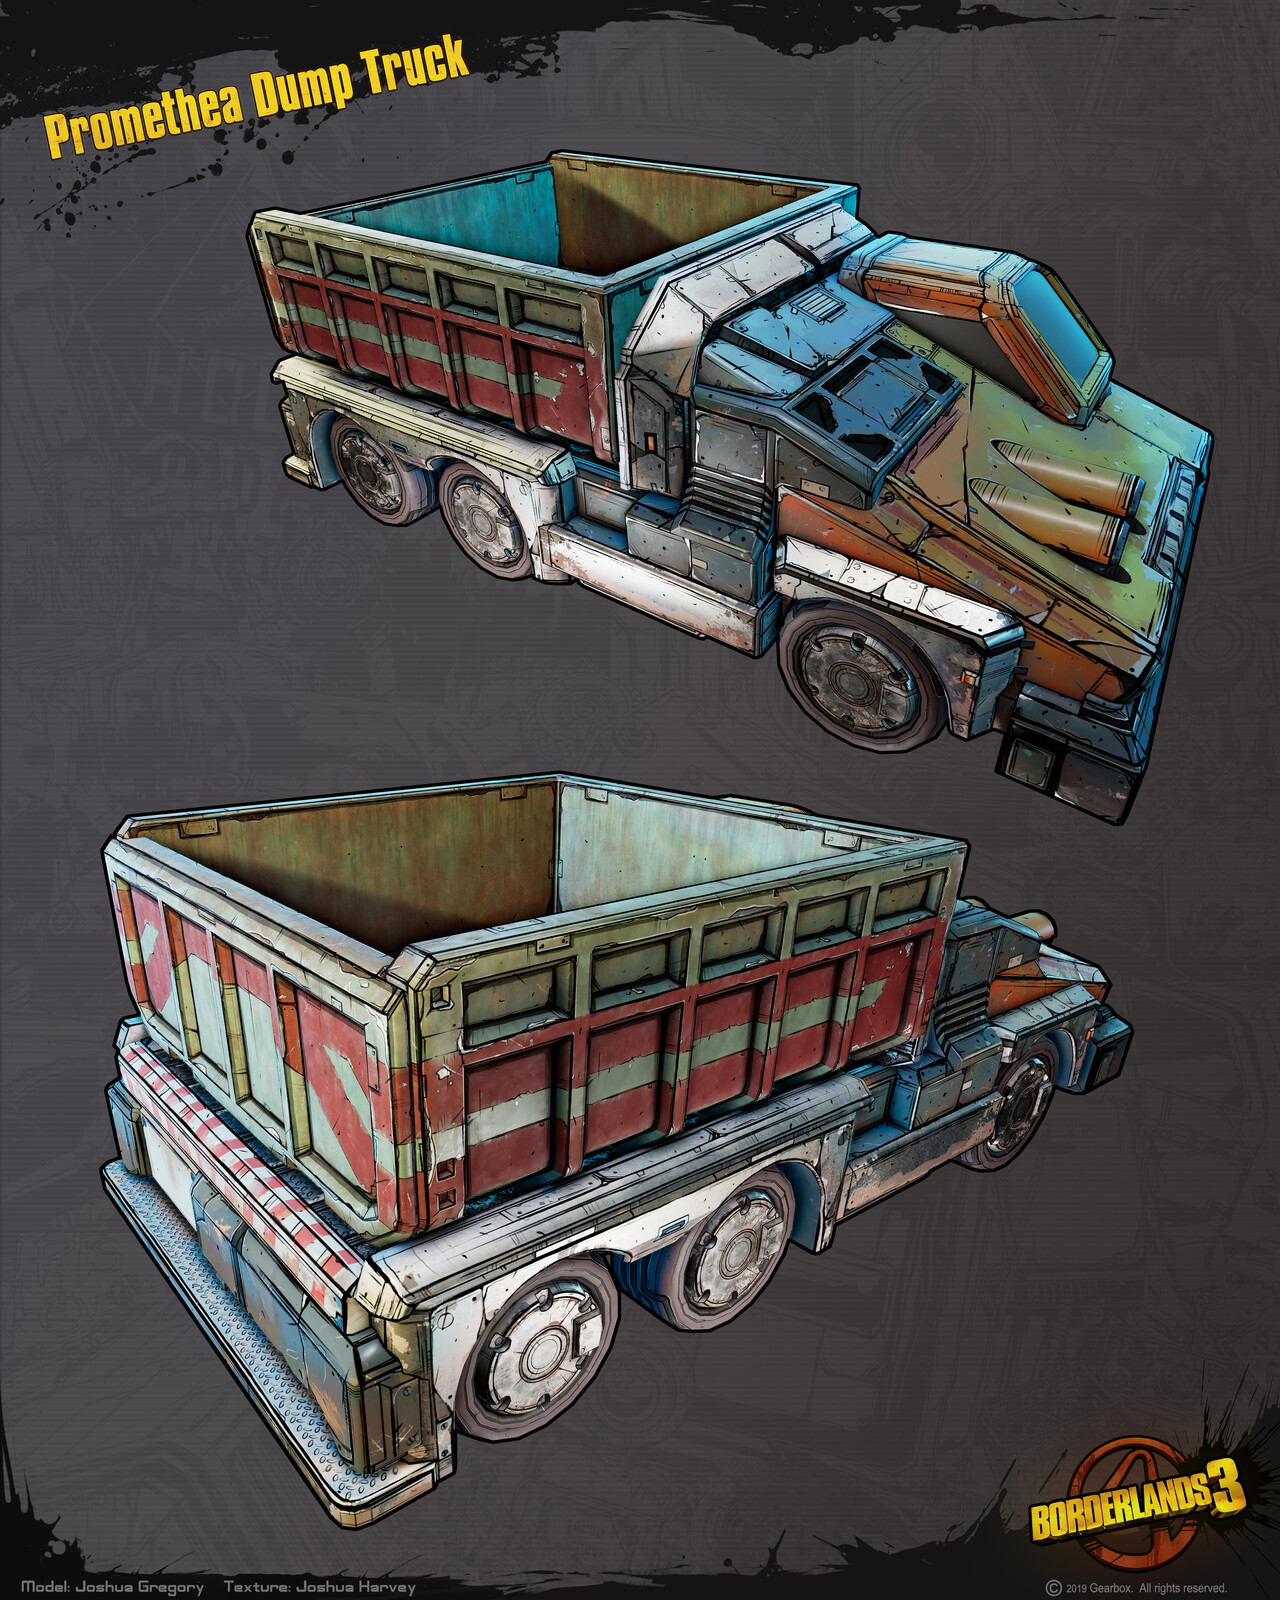 Josh Harvey - Borderlands 3 - Promethea Dump Truck